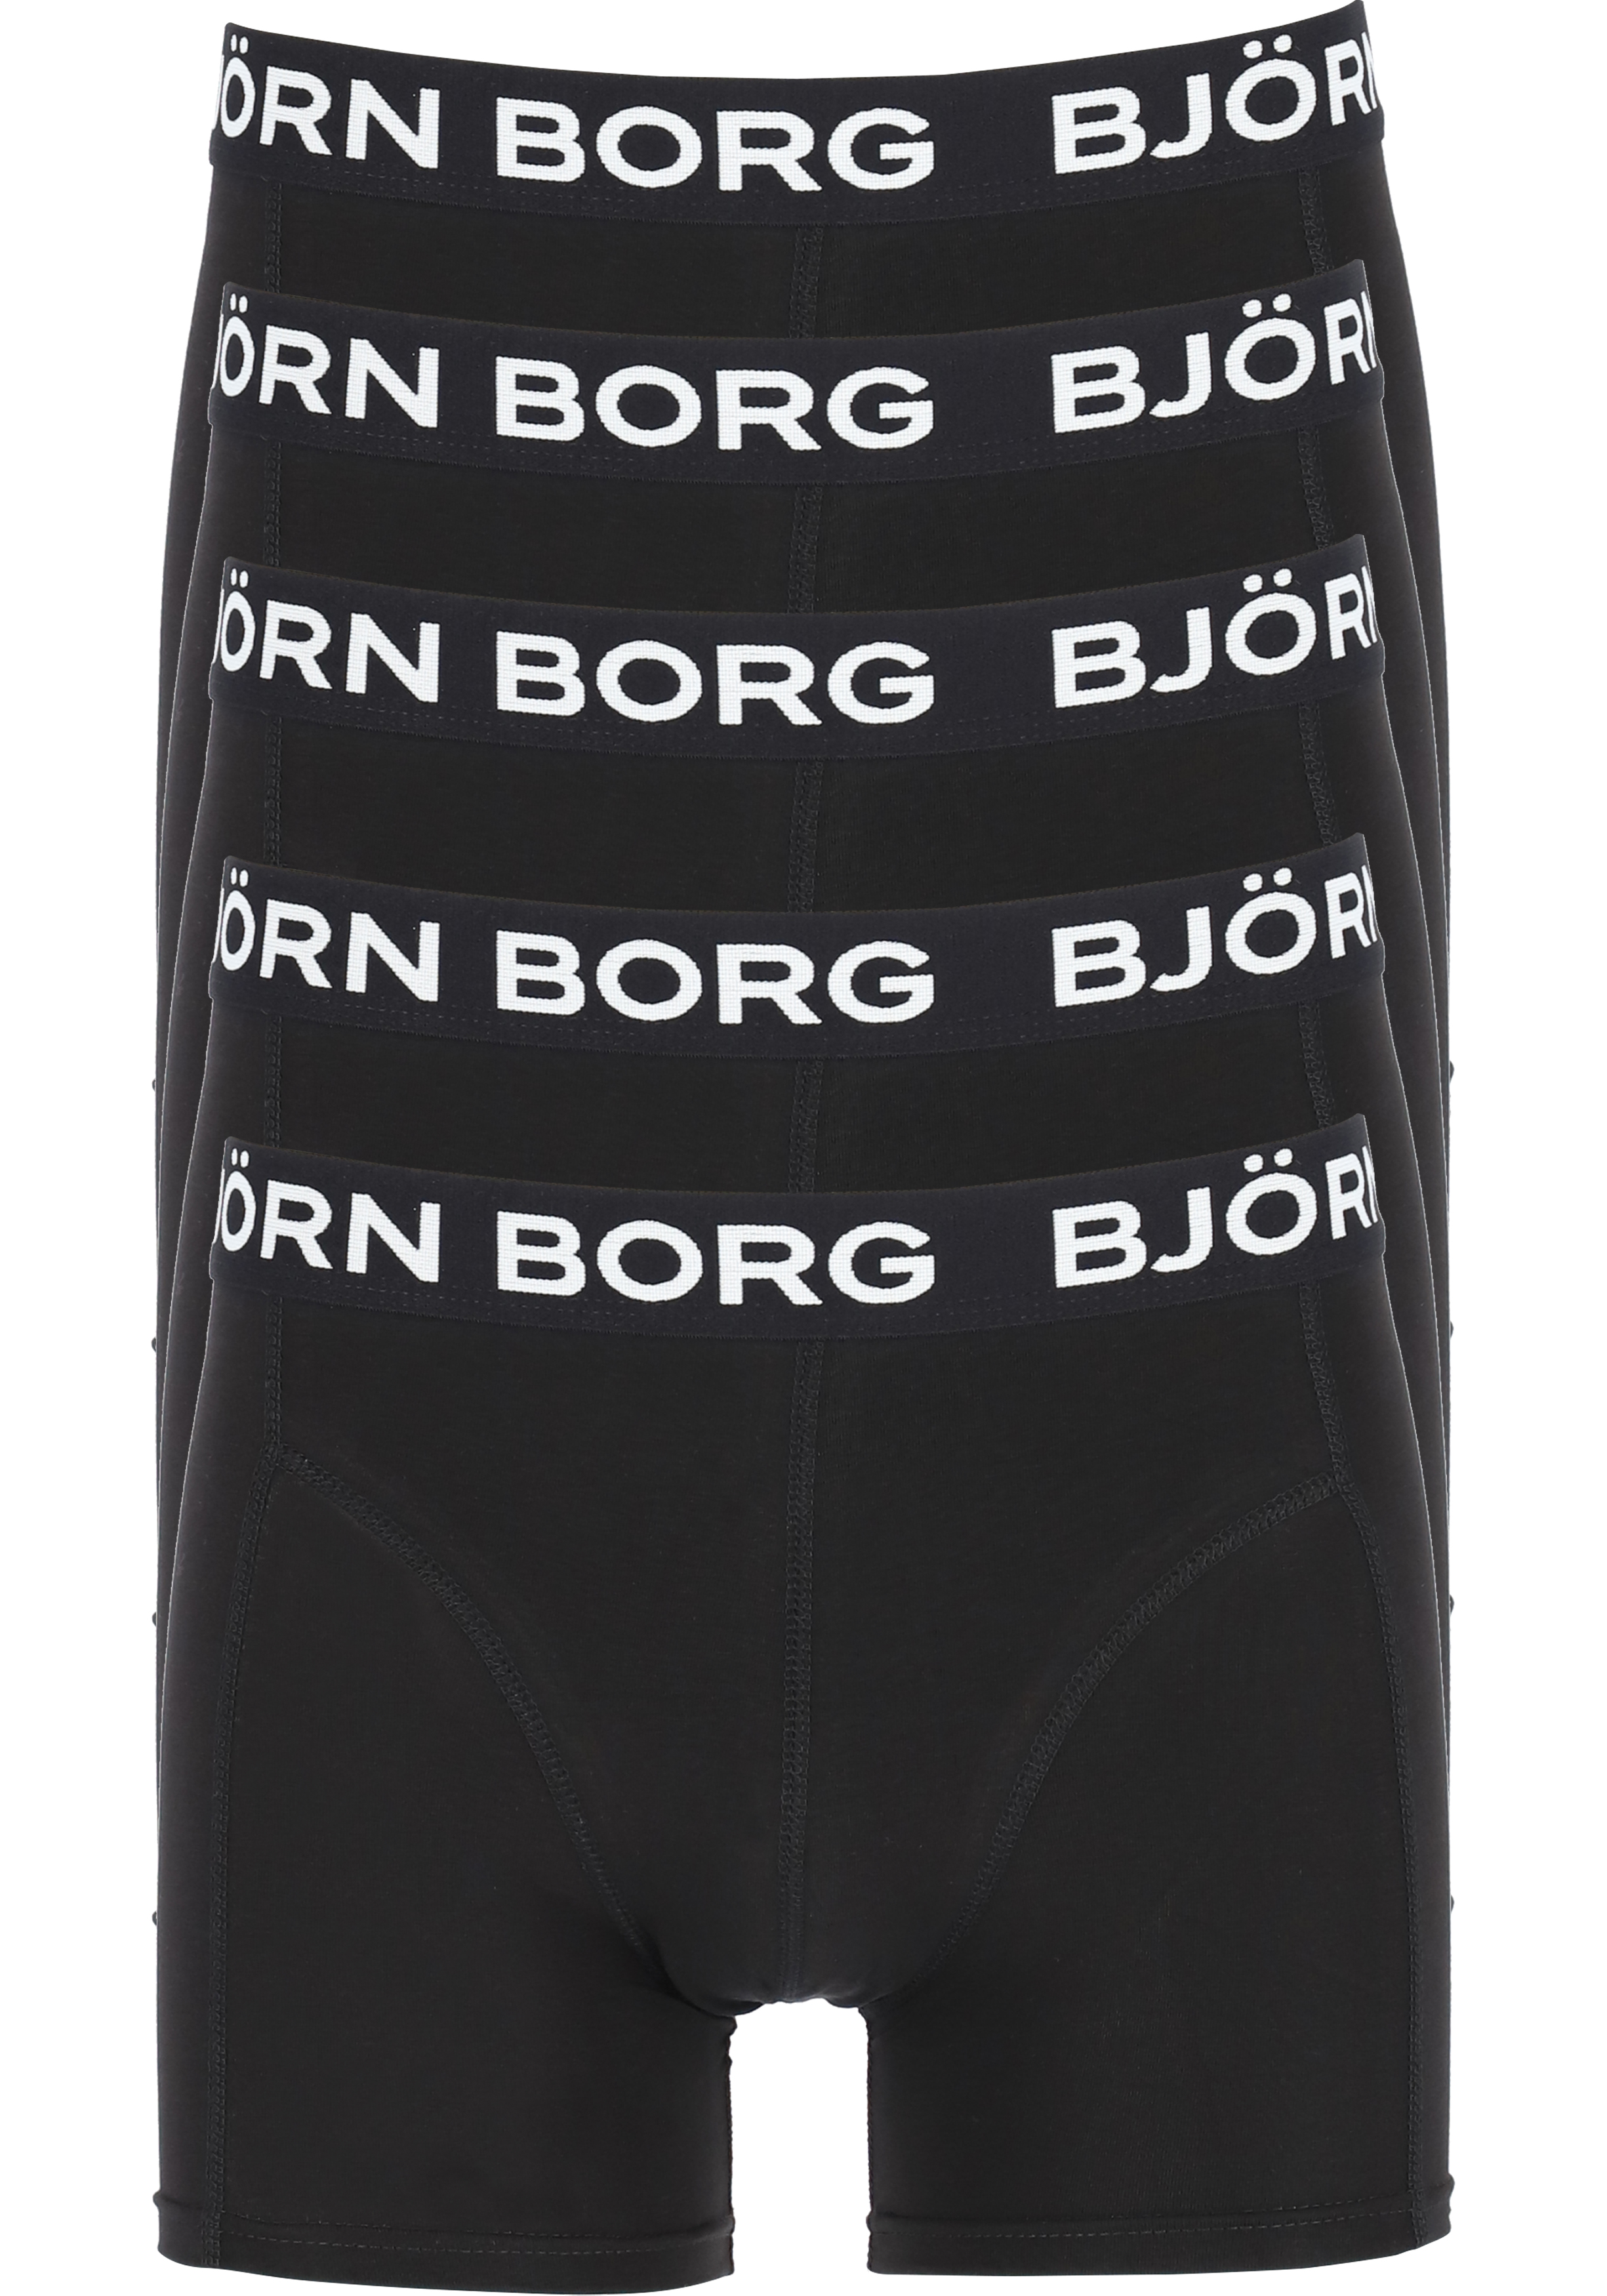 Bjorn Borg boxershorts Essential (5-pack), heren boxers normale lengte, zwart